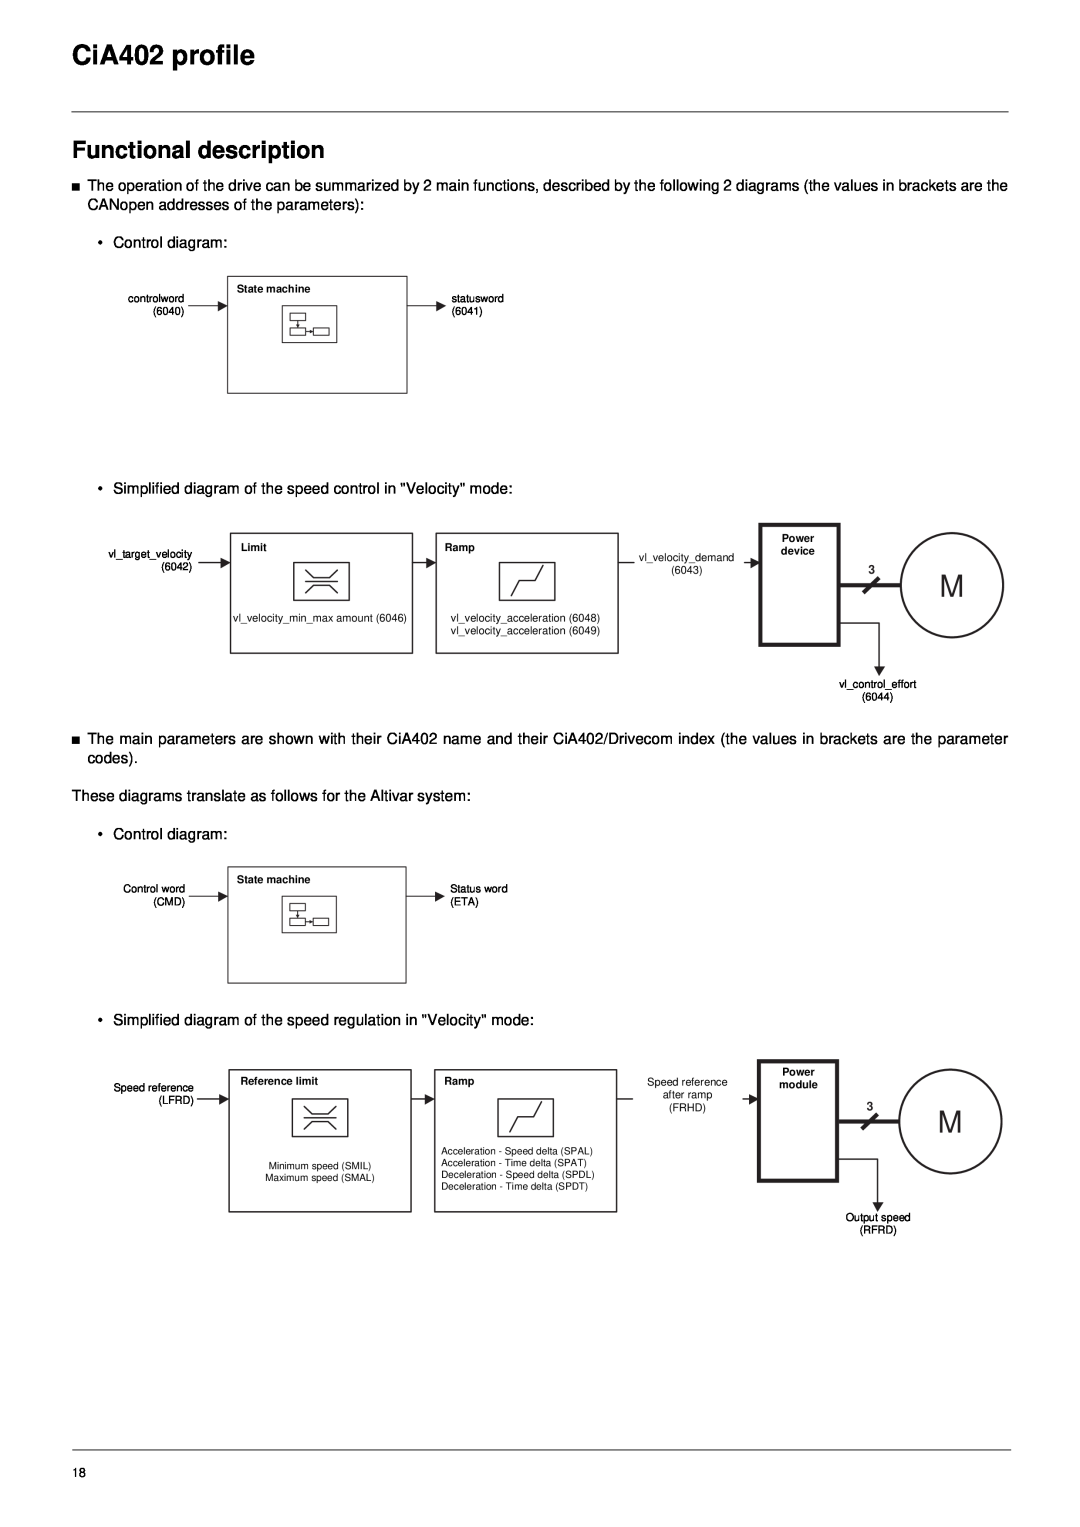 Schneider Electric 61 user manual CiA402 profile, Functional description 